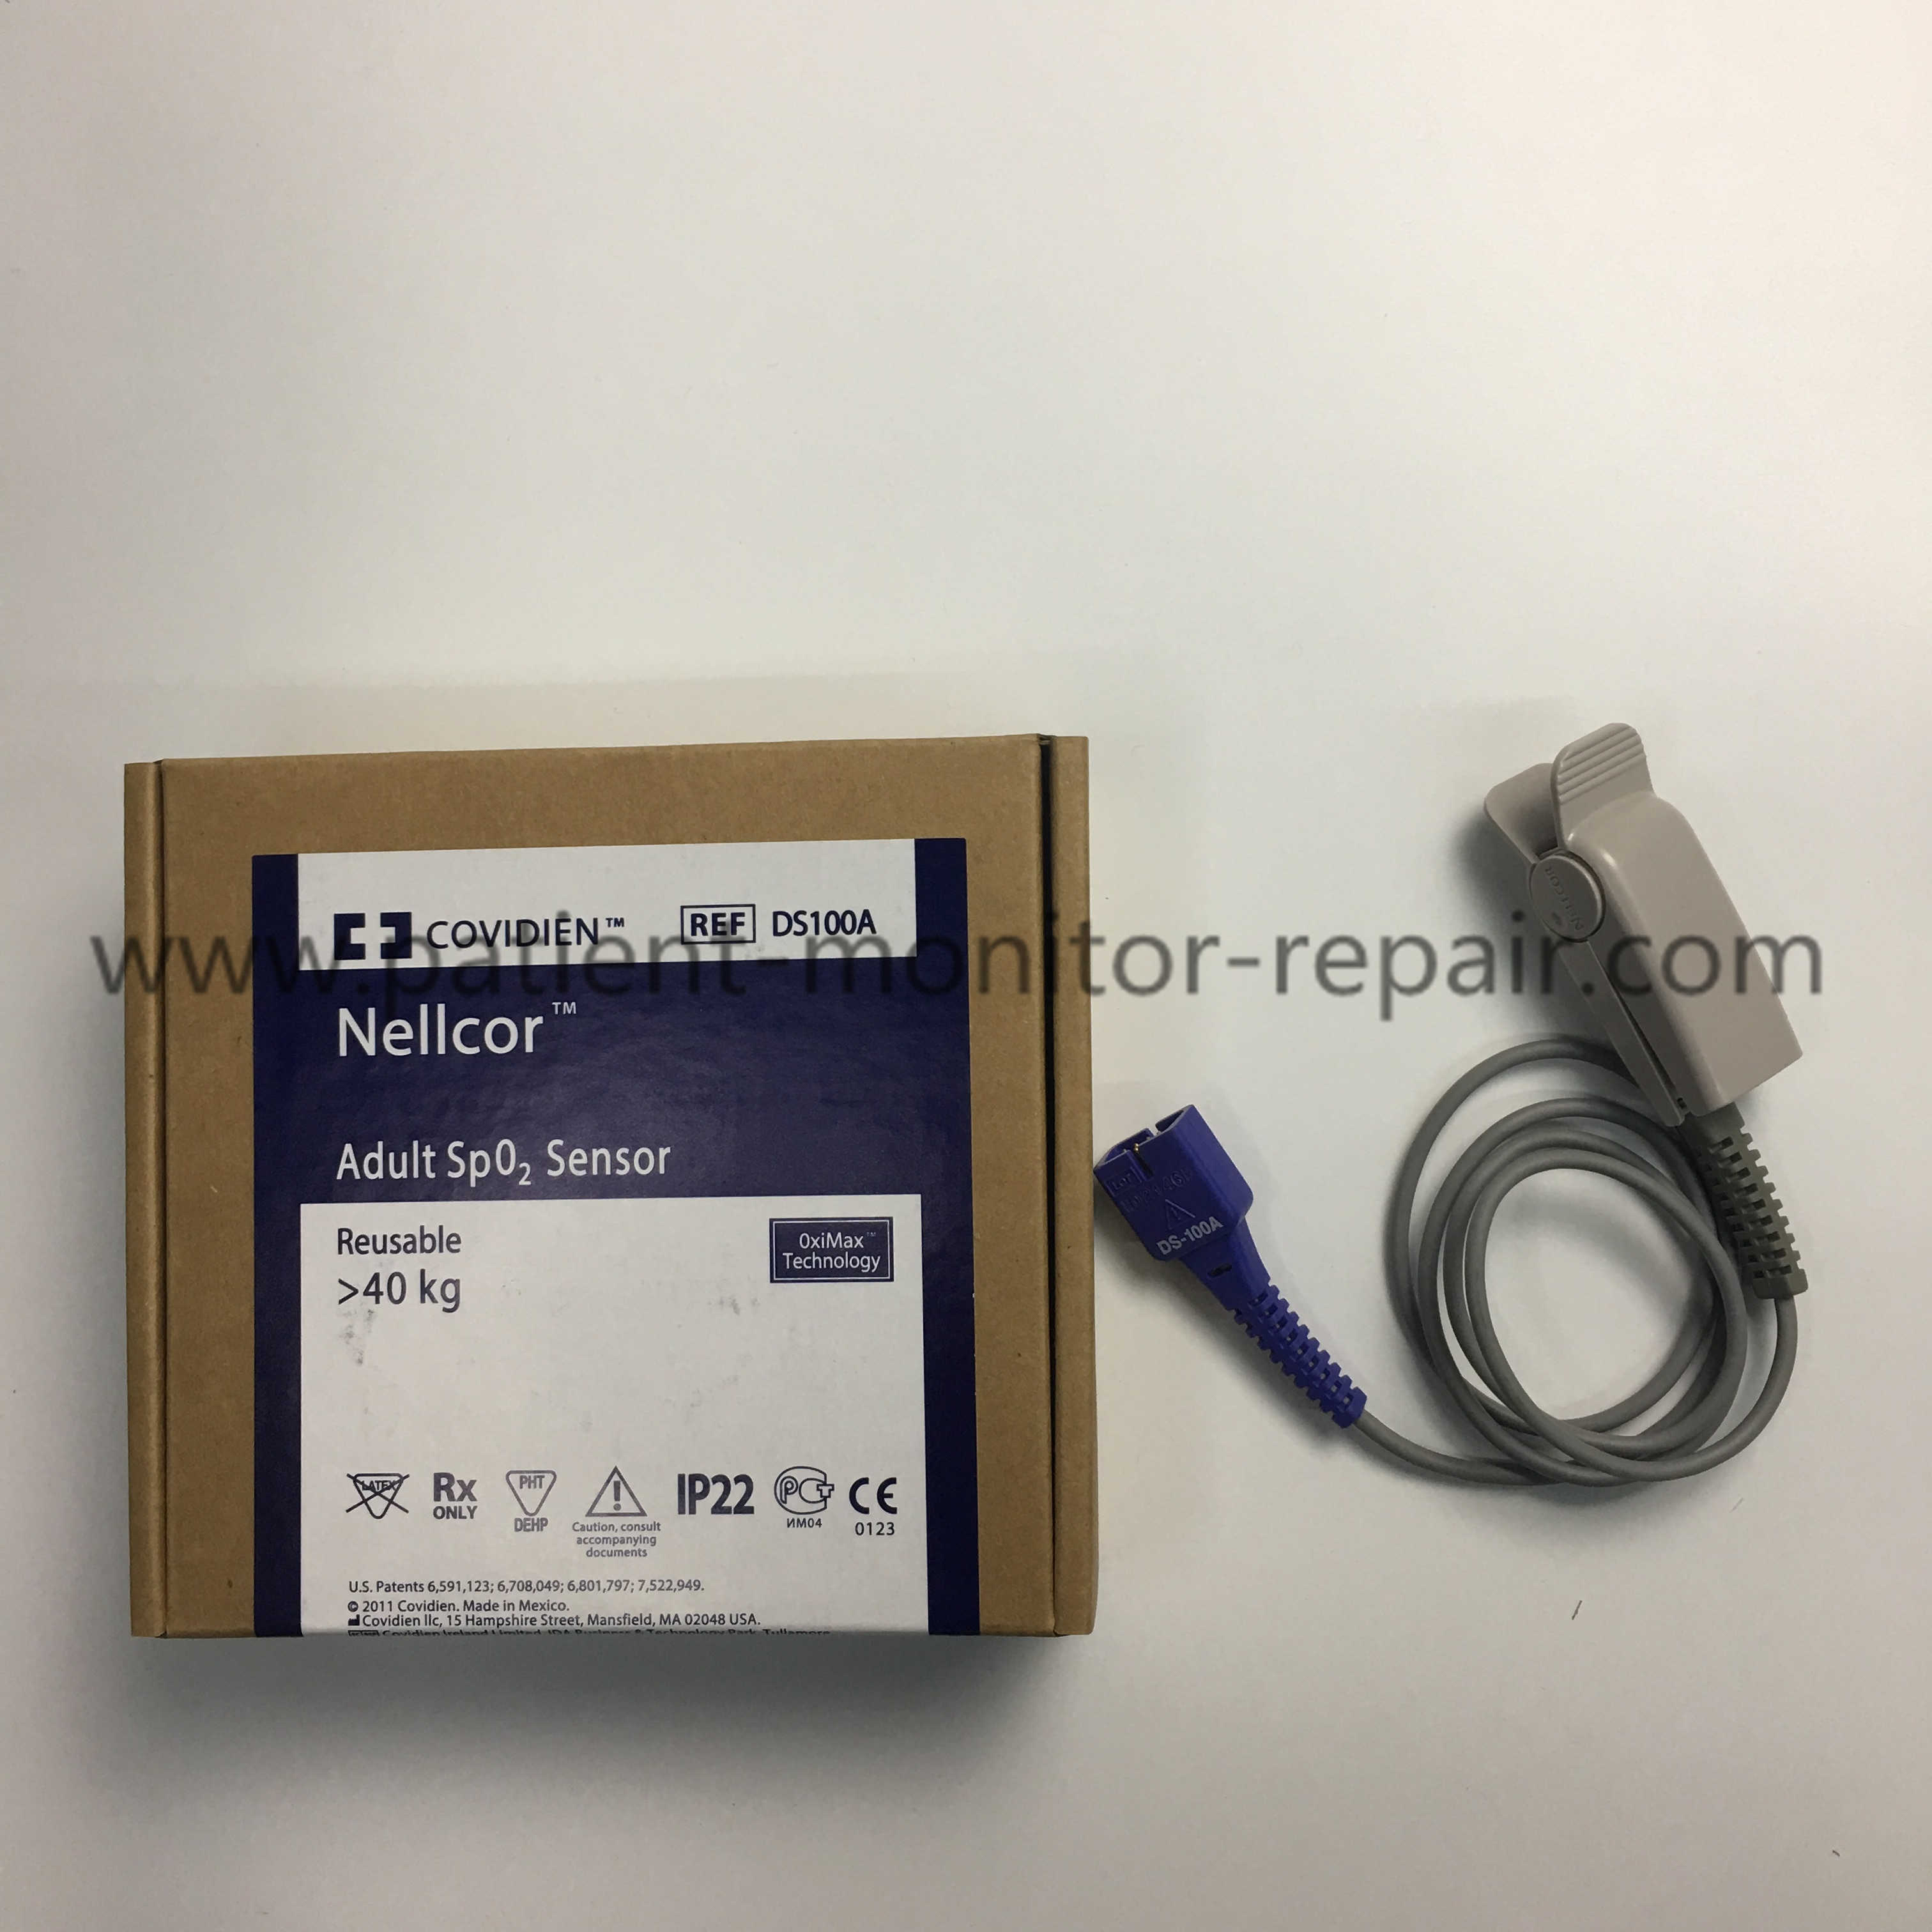 Covidien Nellcor Adult SpO2 Sensor DS-100A Reusable Medical Accessory